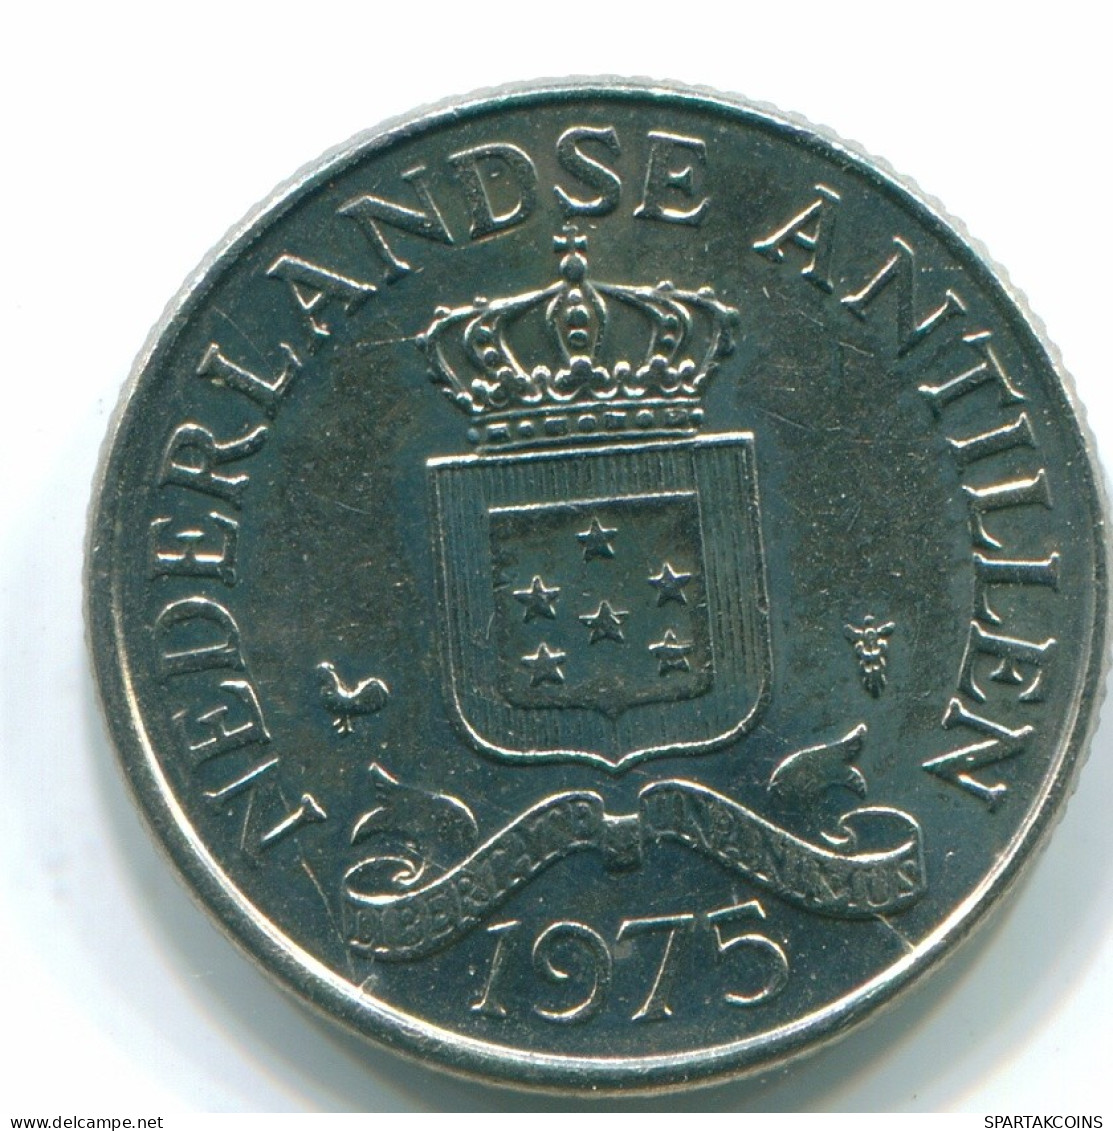 25 CENTS 1975 NIEDERLÄNDISCHE ANTILLEN Nickel Koloniale Münze #S11610.D.A - Nederlandse Antillen